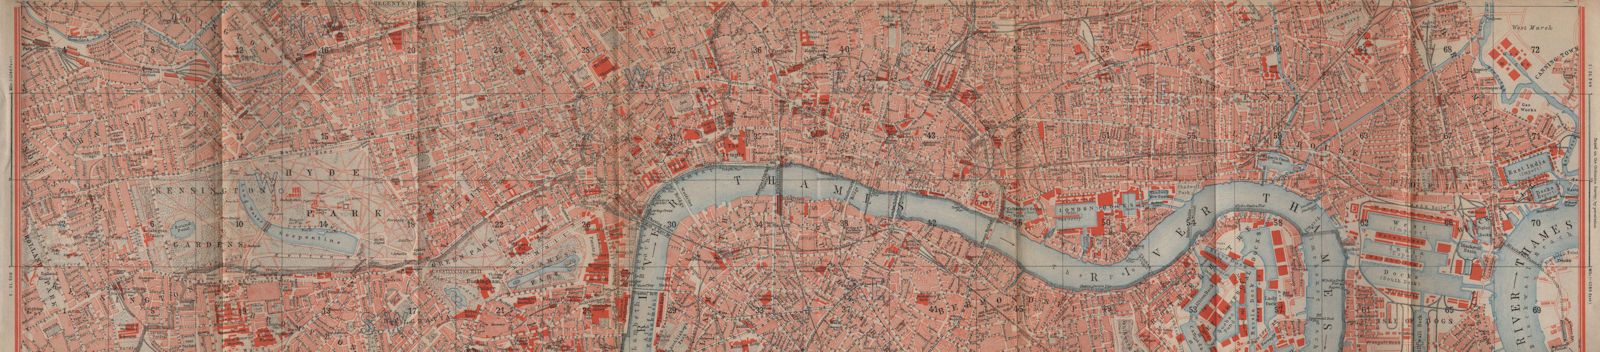 Associate Product CENTRAL LONDON Bayswater Kensington Mayfair Southwark City Docks 1930 old map